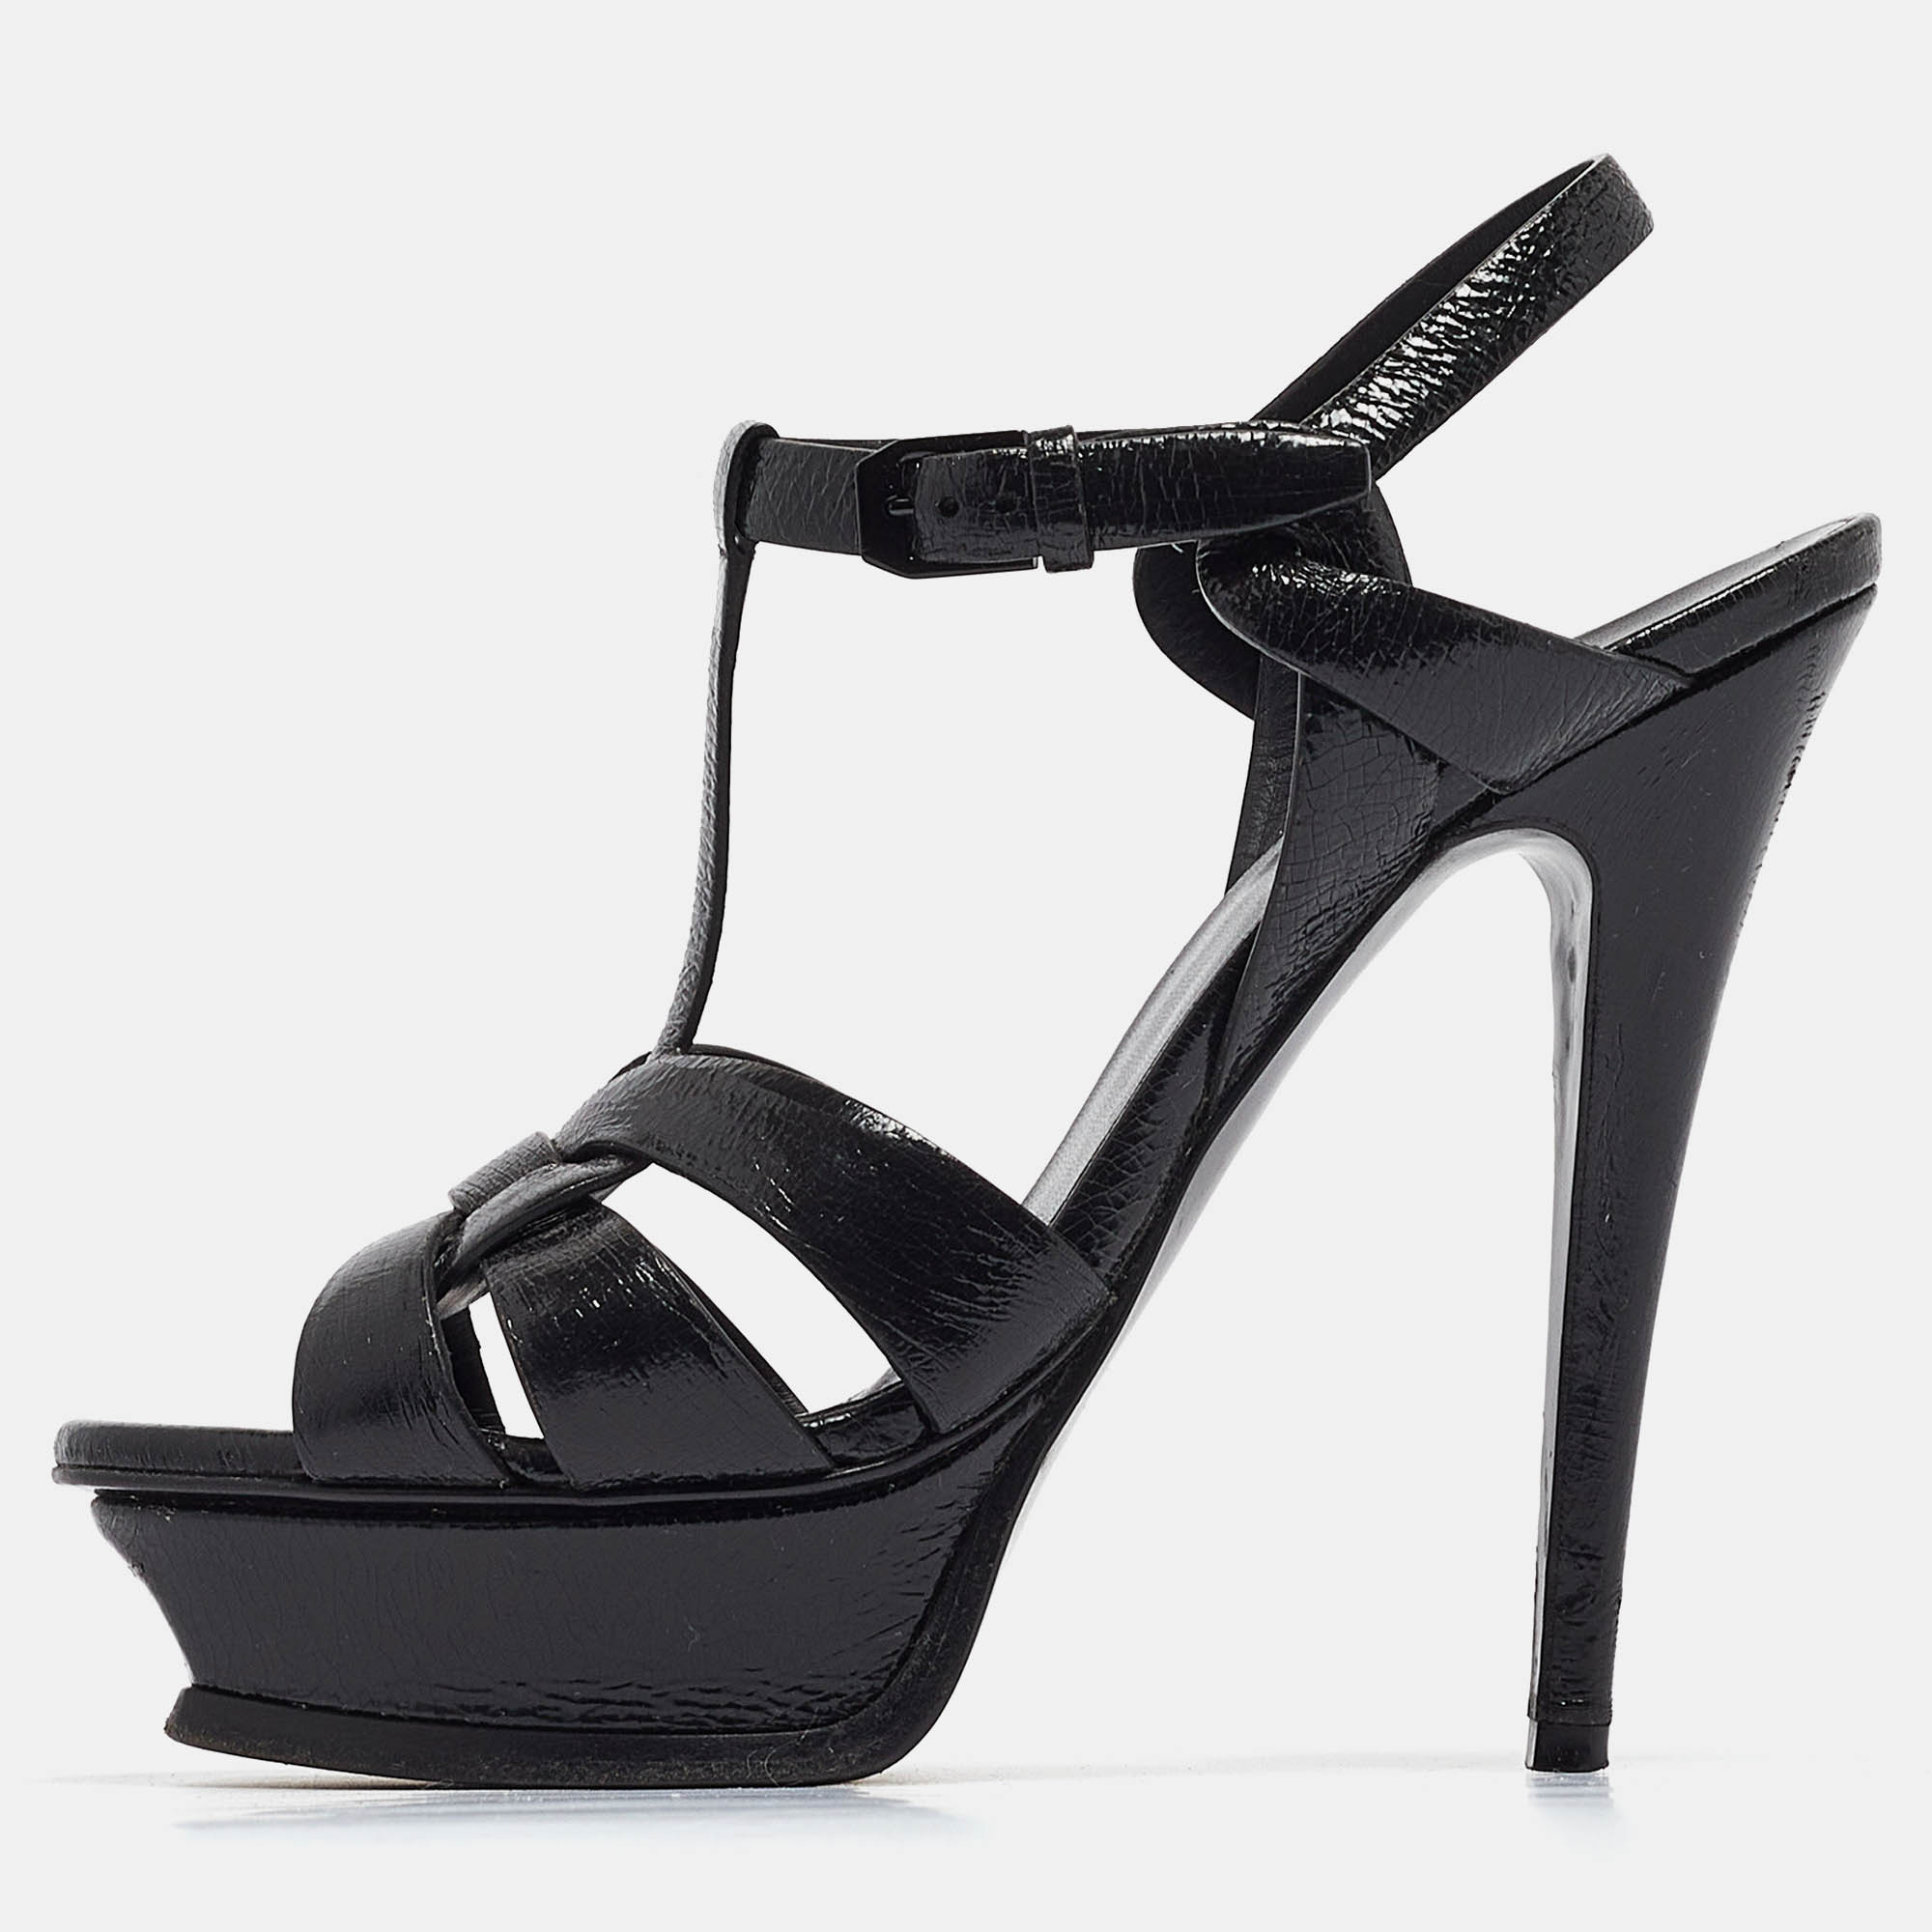 Yves saint laurent black textured patent leather tribute platform ankle strap sandals size 36.5